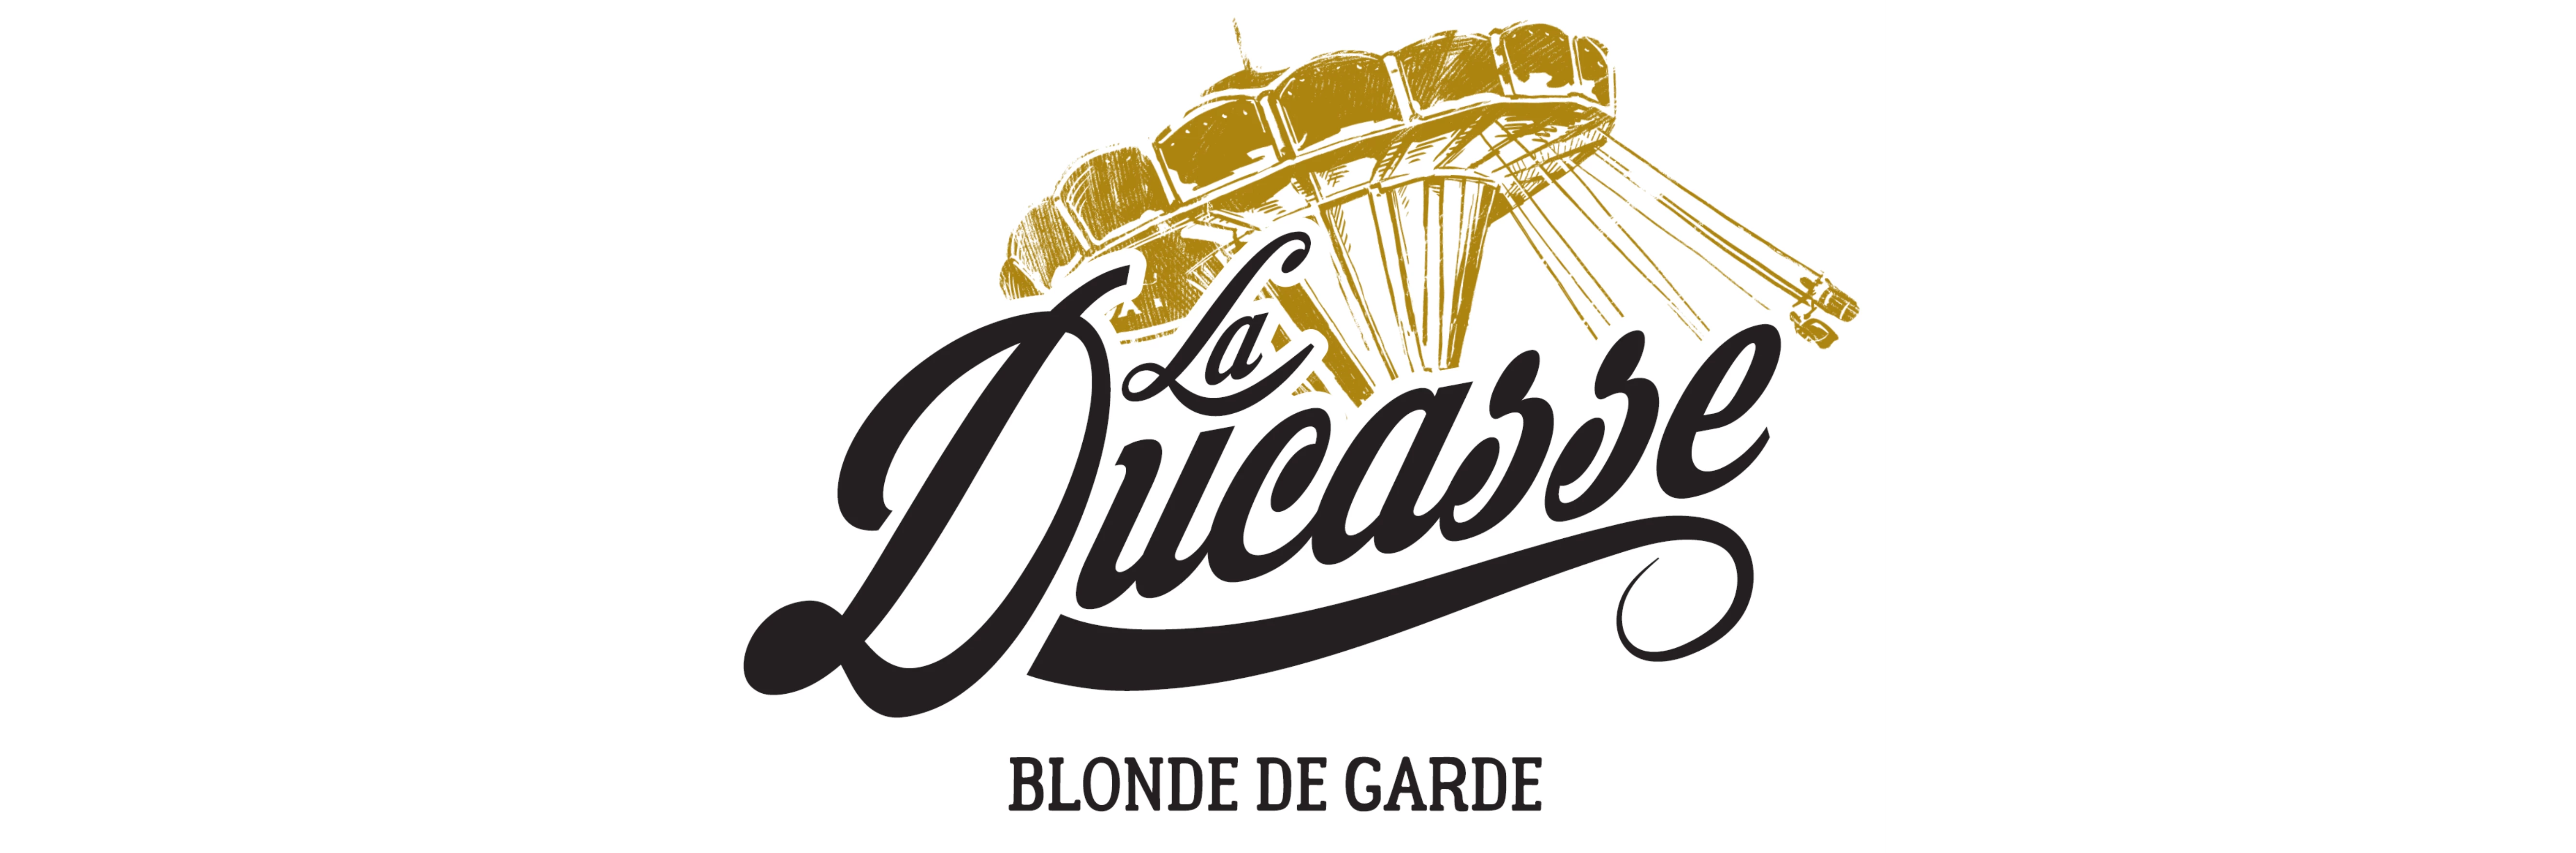 Ducasse Blonde De Garde